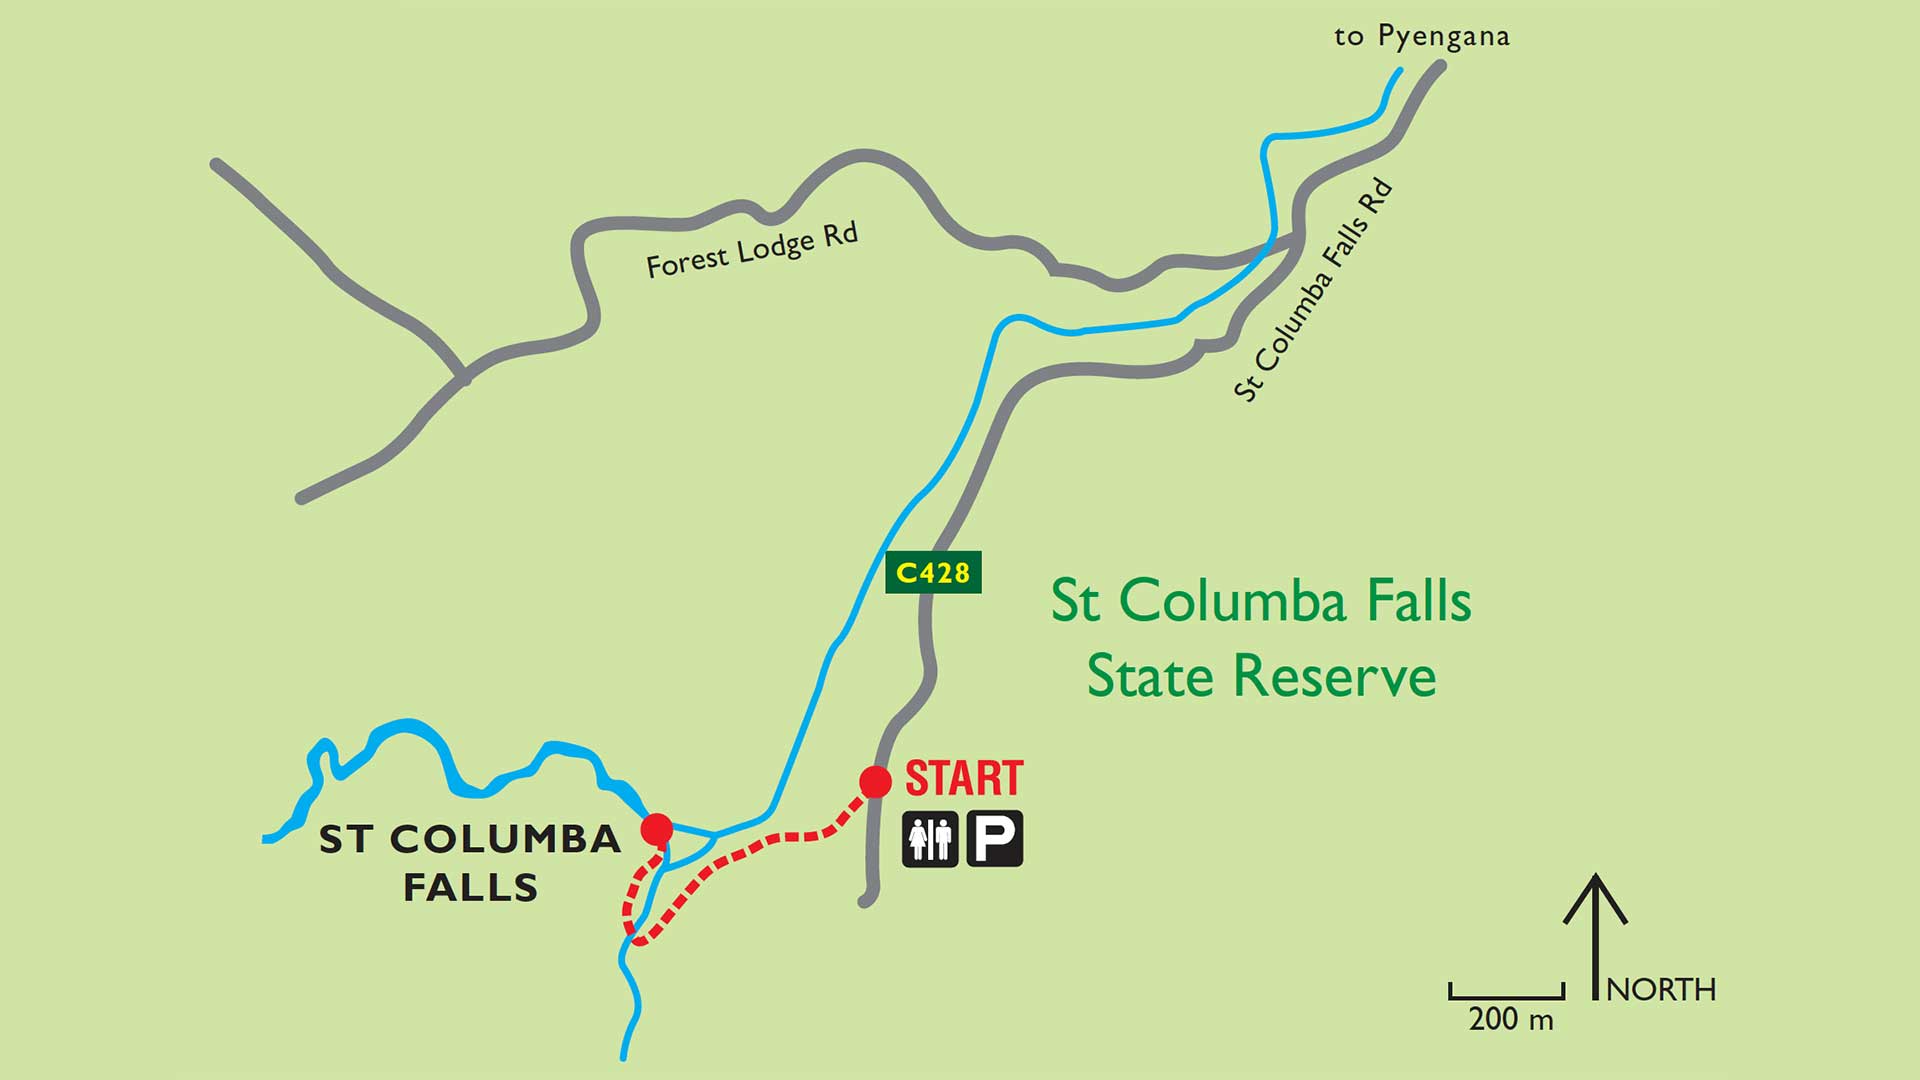 St Columba Falls